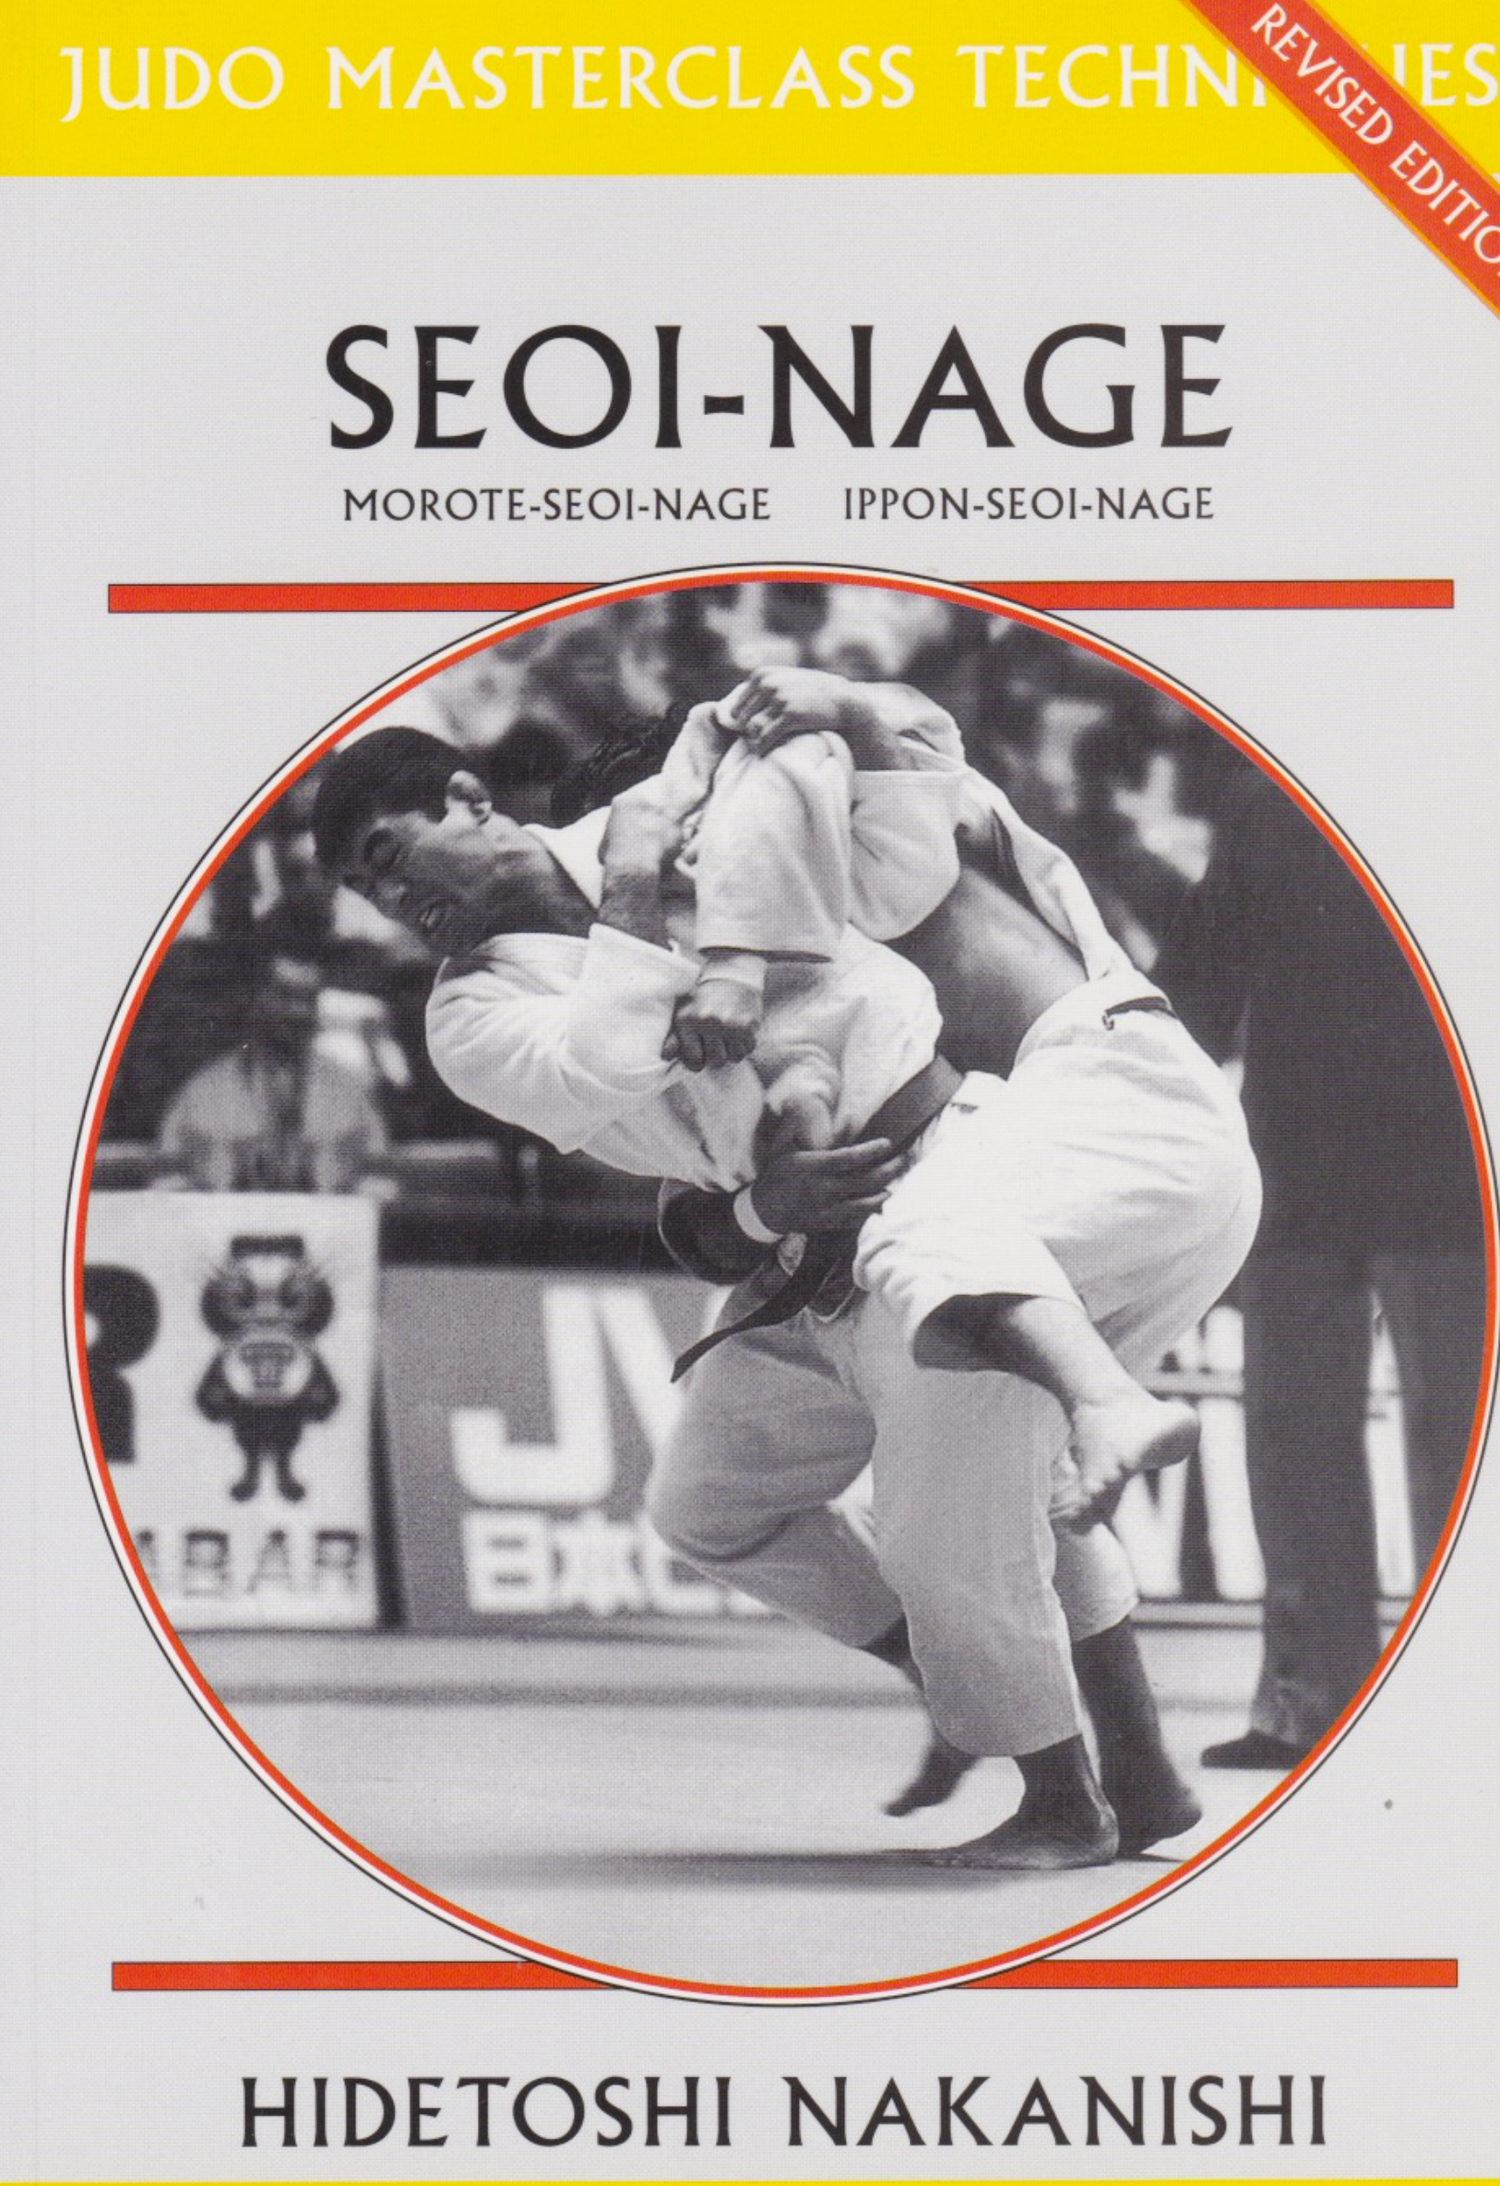 Seoi-Nage (Judo Masterclass Series) Book by Hidetoshi Nakanishi (Preowned) - Budovideos Inc